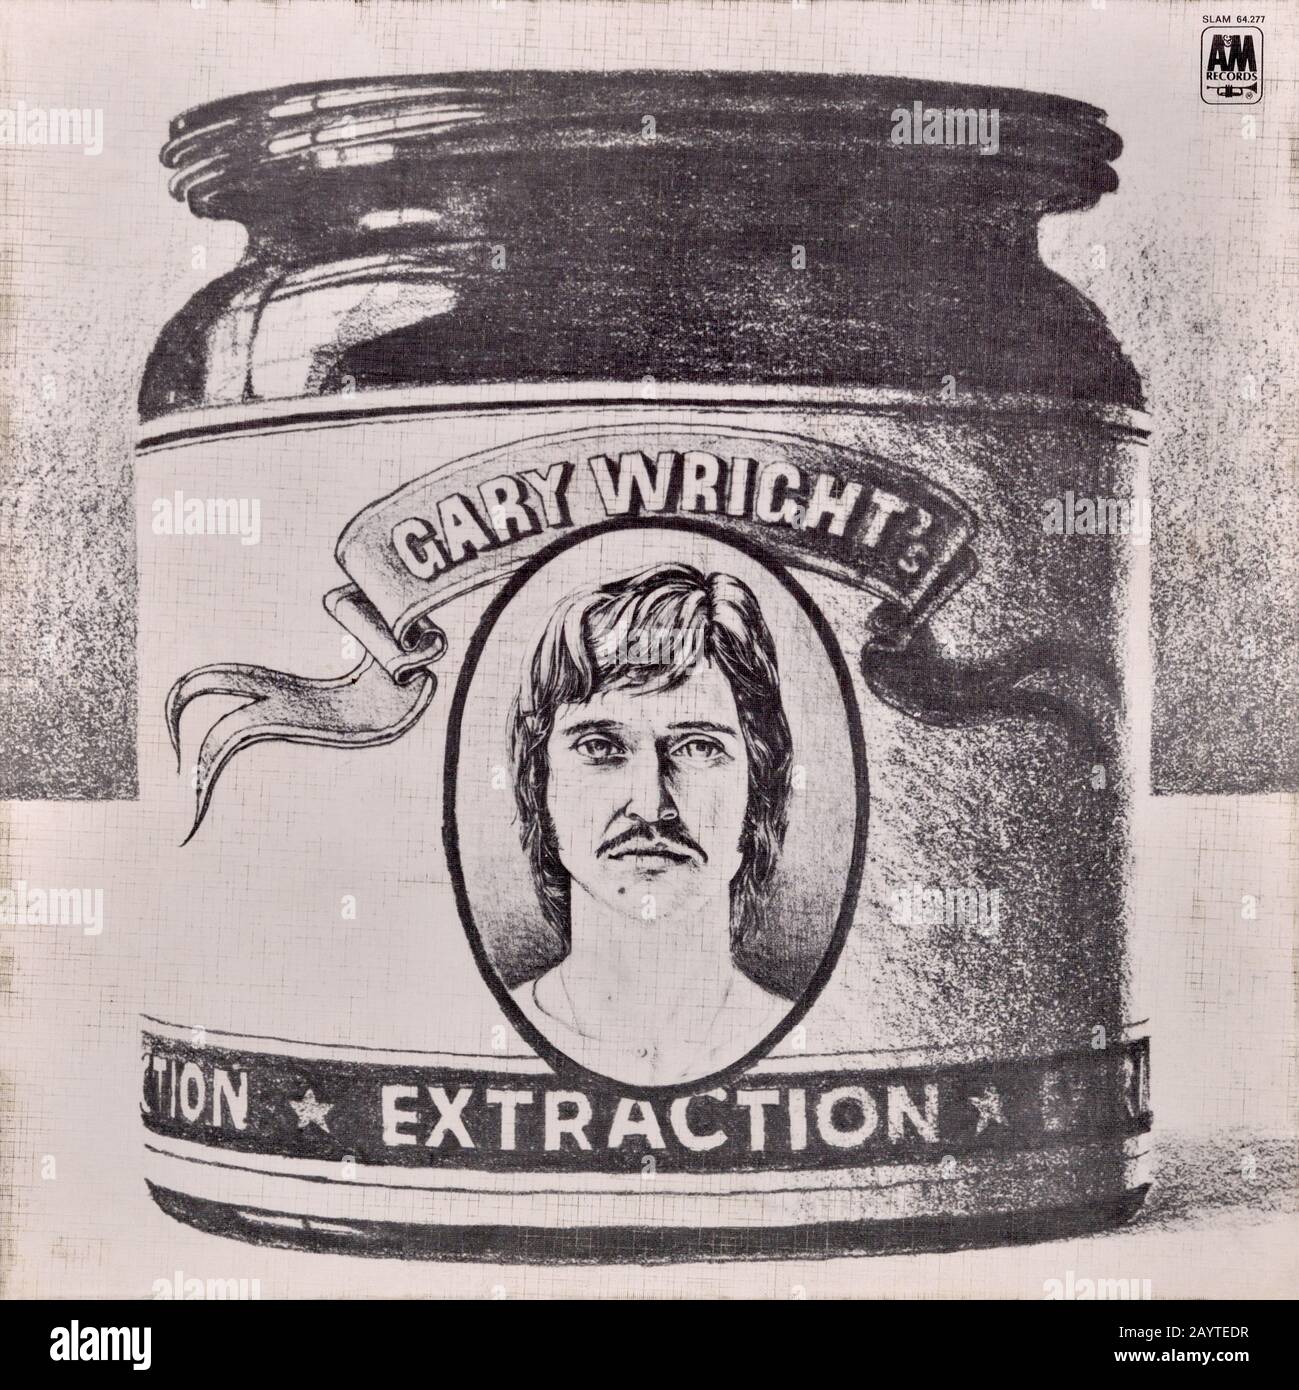 Gary Wright - original Vinyl Album Cover - Gary Wright's Extraction - 1970 Stockfoto